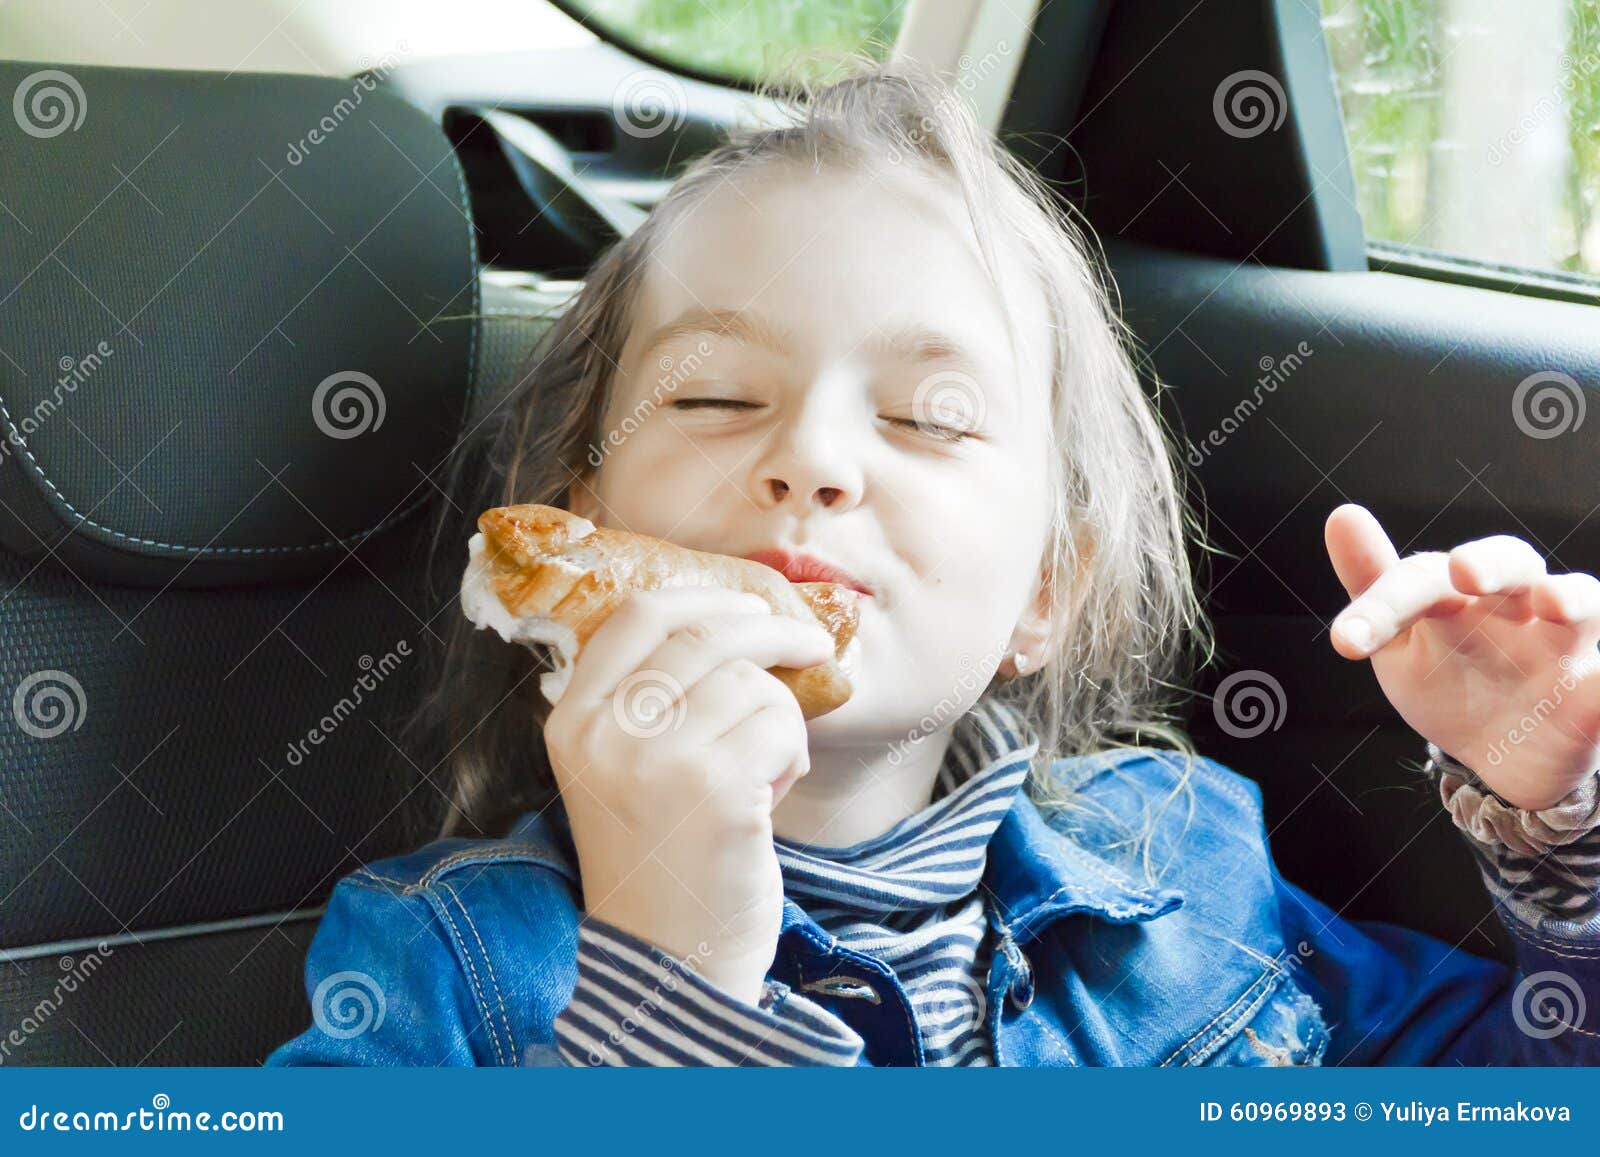 https://thumbs.dreamstime.com/z/eating-cute-girl-sitting-inside-car-blond-wet-hair-60969893.jpg